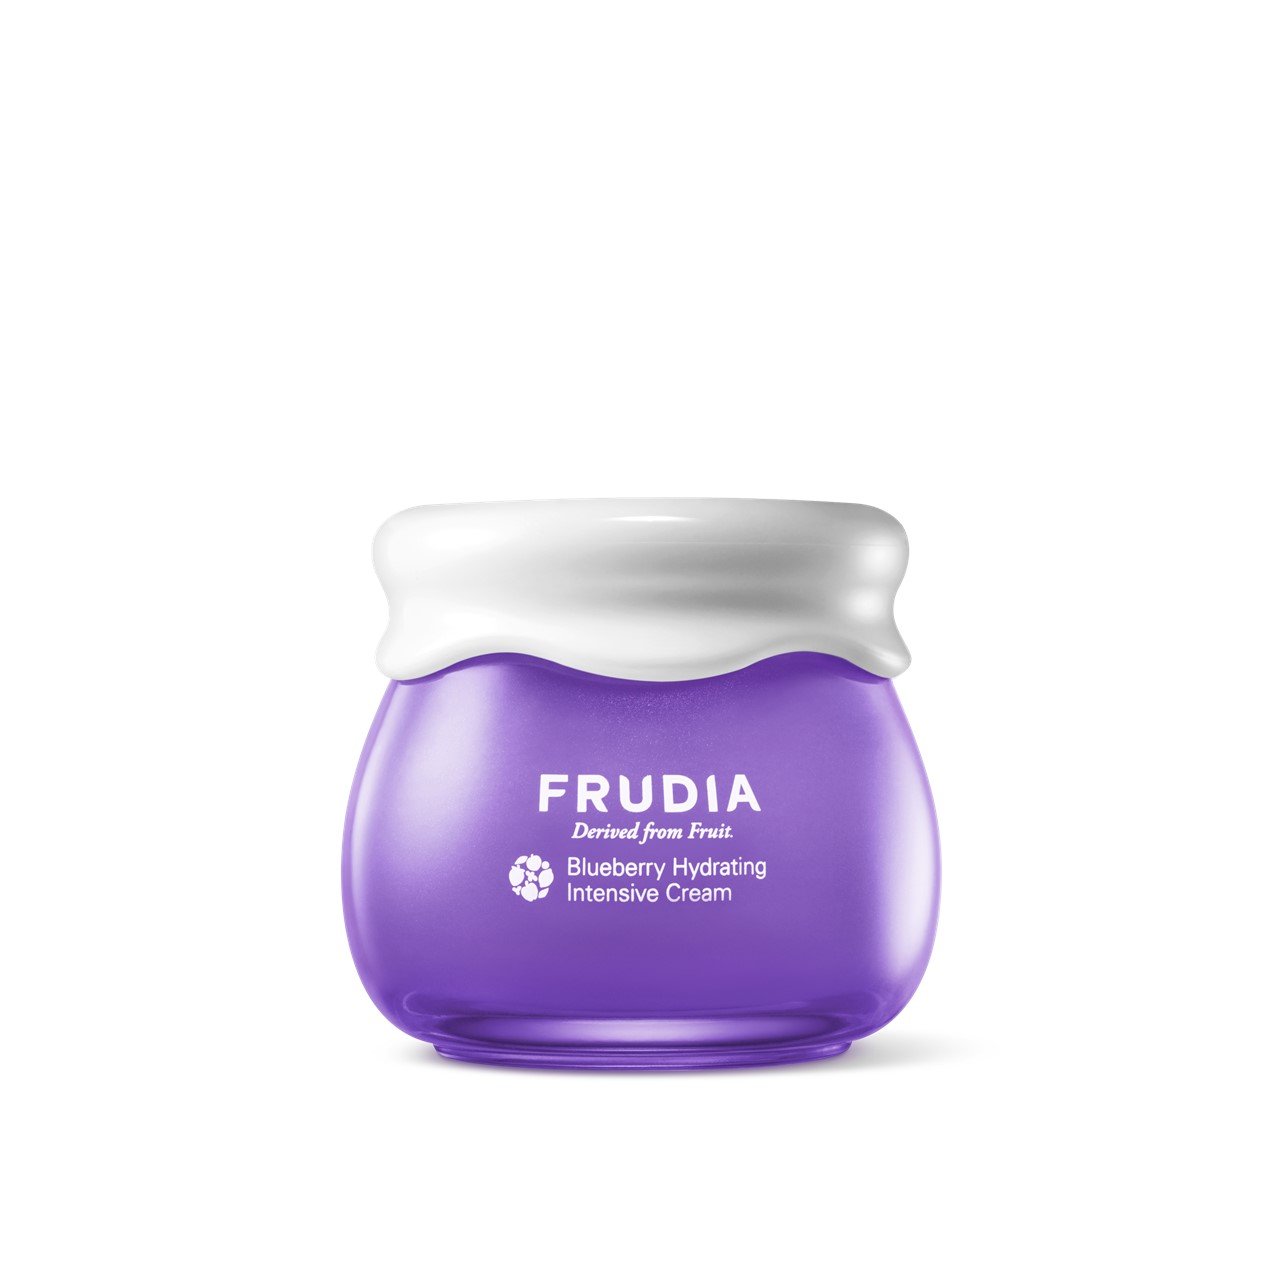 Frudia Blueberry Hydrating Intensive Cream 55g (1.94 oz)